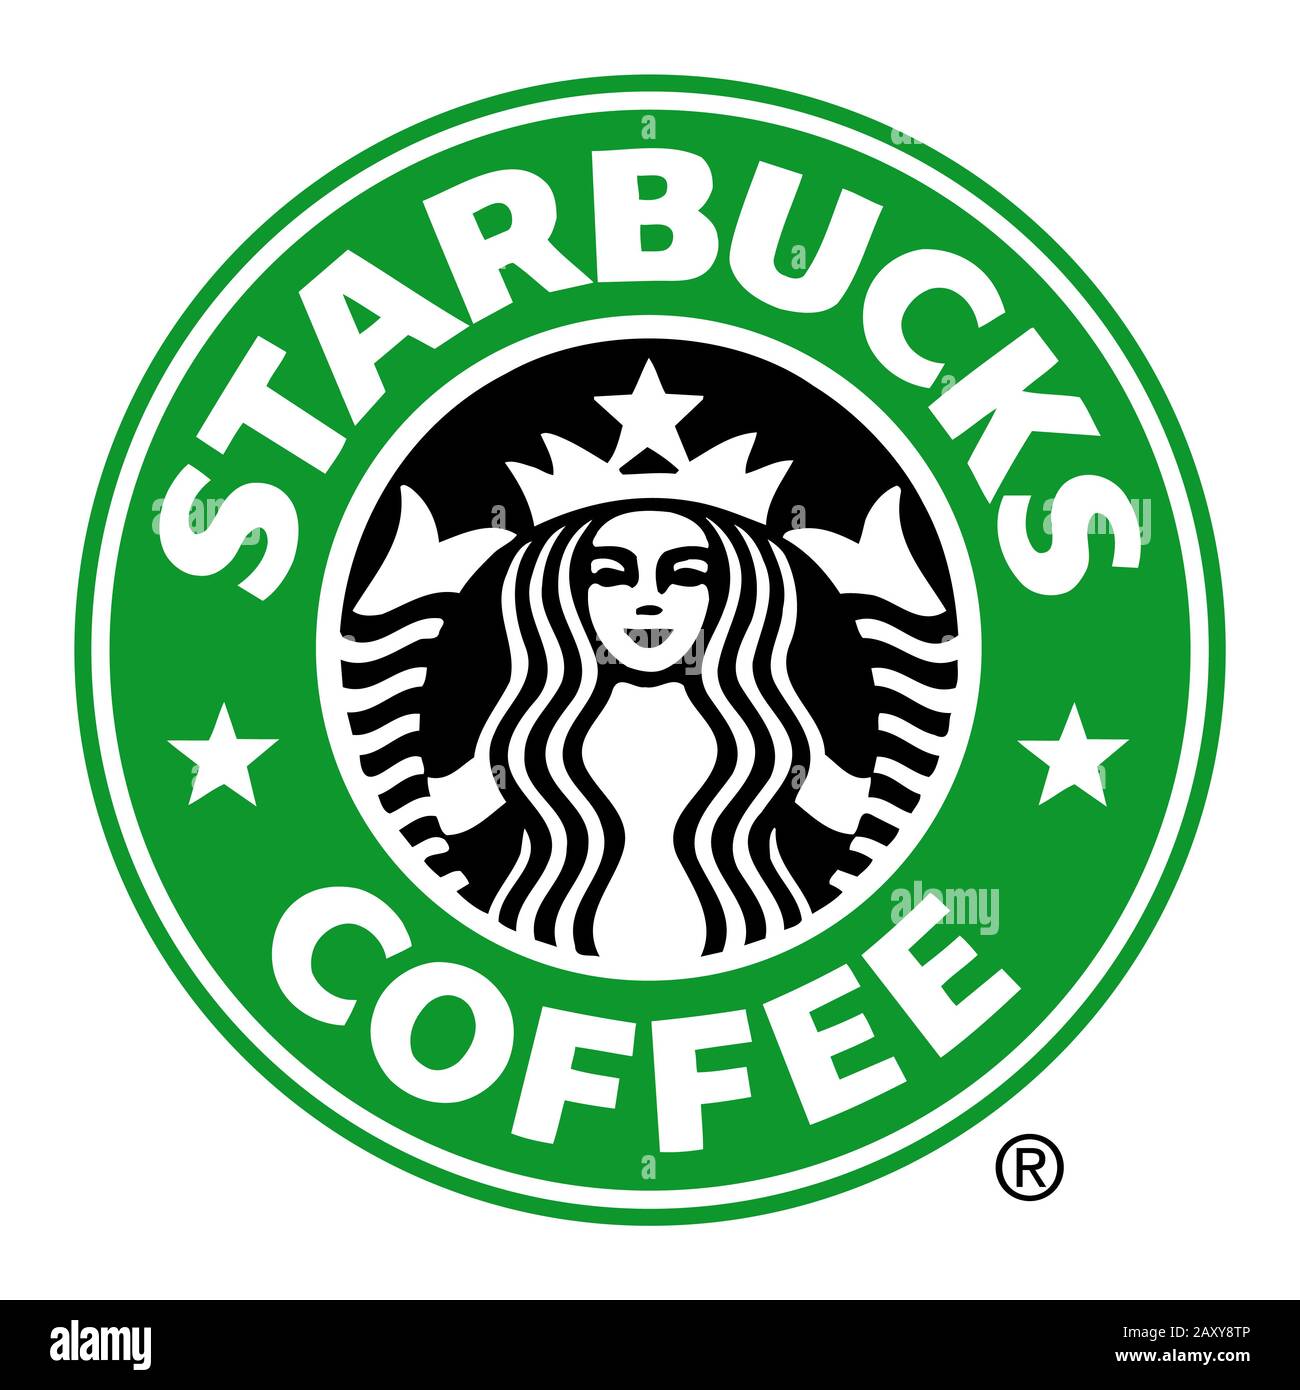 Starbucks Coffee logo Stock Photo